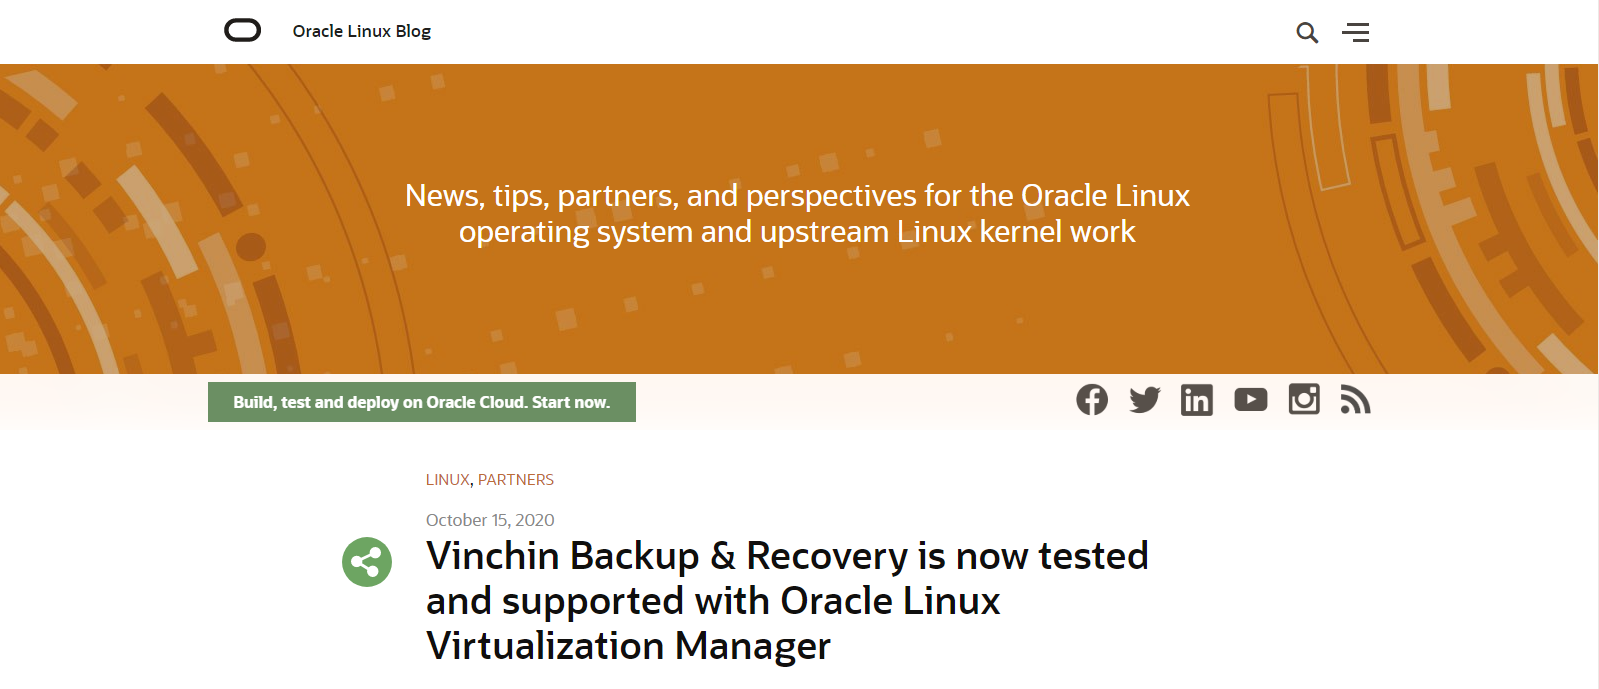 云祺容灾备份系统稳定支持Oracle Linux KVM和Oracle Linux Virtualization Manager